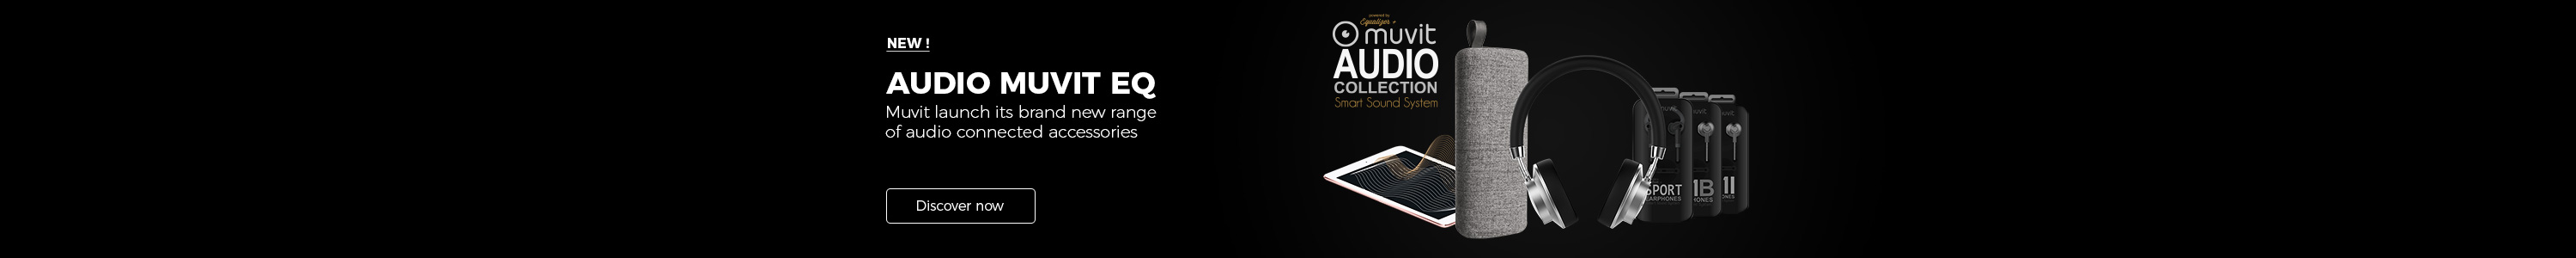 grande image muvit audio new accessories range